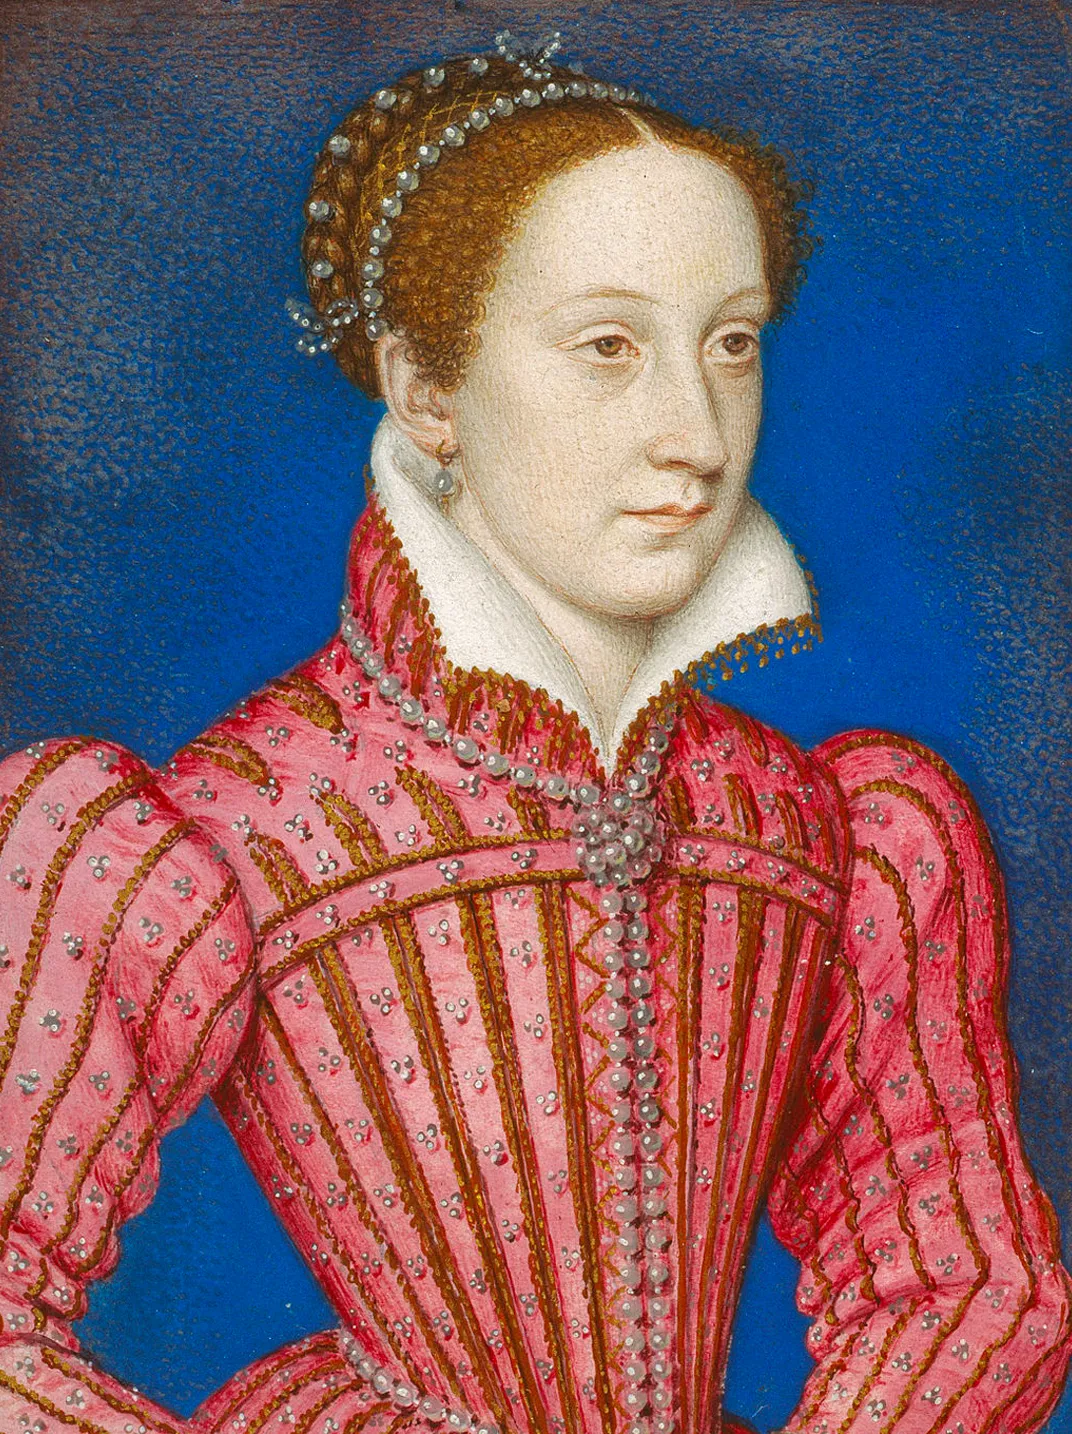 Francois Clouet portrait of Mary, Queen of Scots